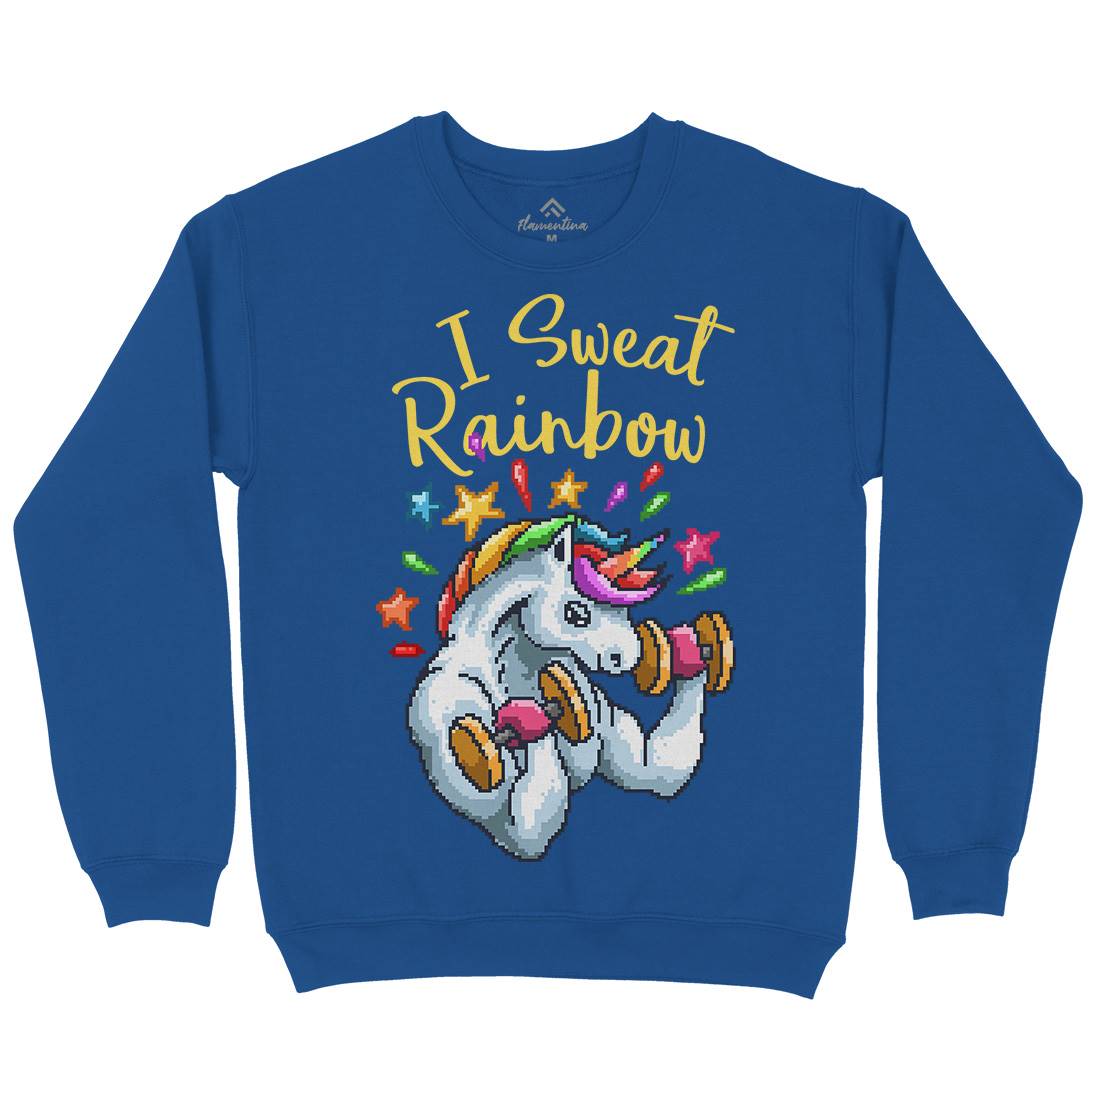 I Sweat Rainbow Kids Crew Neck Sweatshirt Retro B916